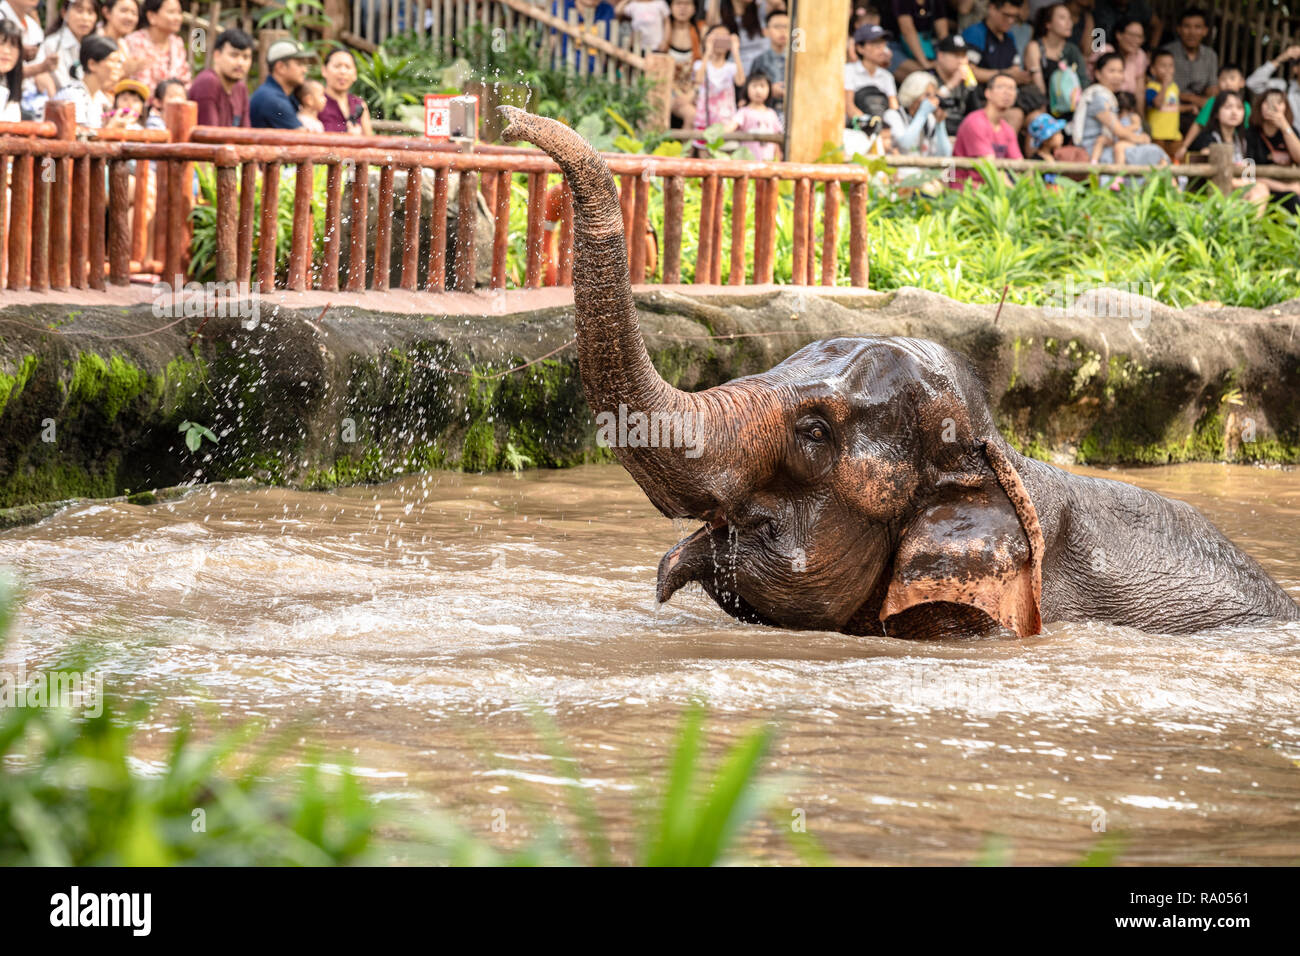 Singapore, December 2018: Asian elephant, Elephas maximus, taking a bath in the zoo. Stock Photo